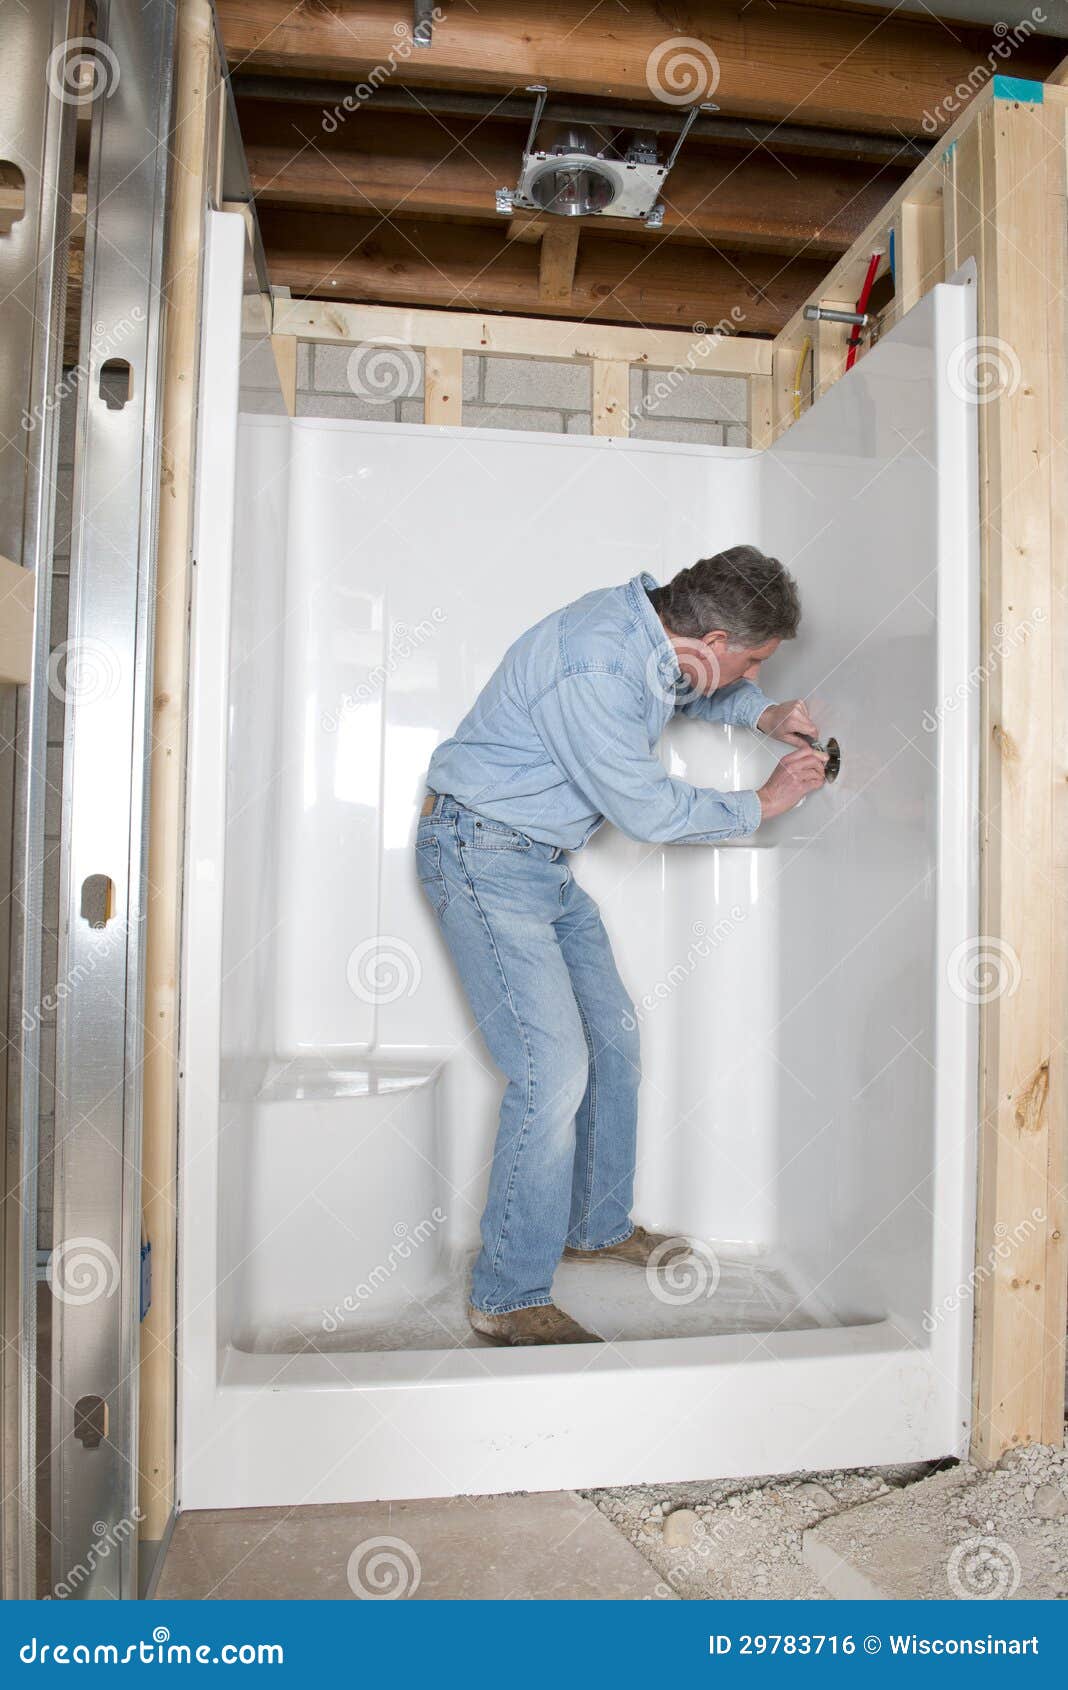 Plumber Install Bathroom Shower Home Remodel Stock Photo Image